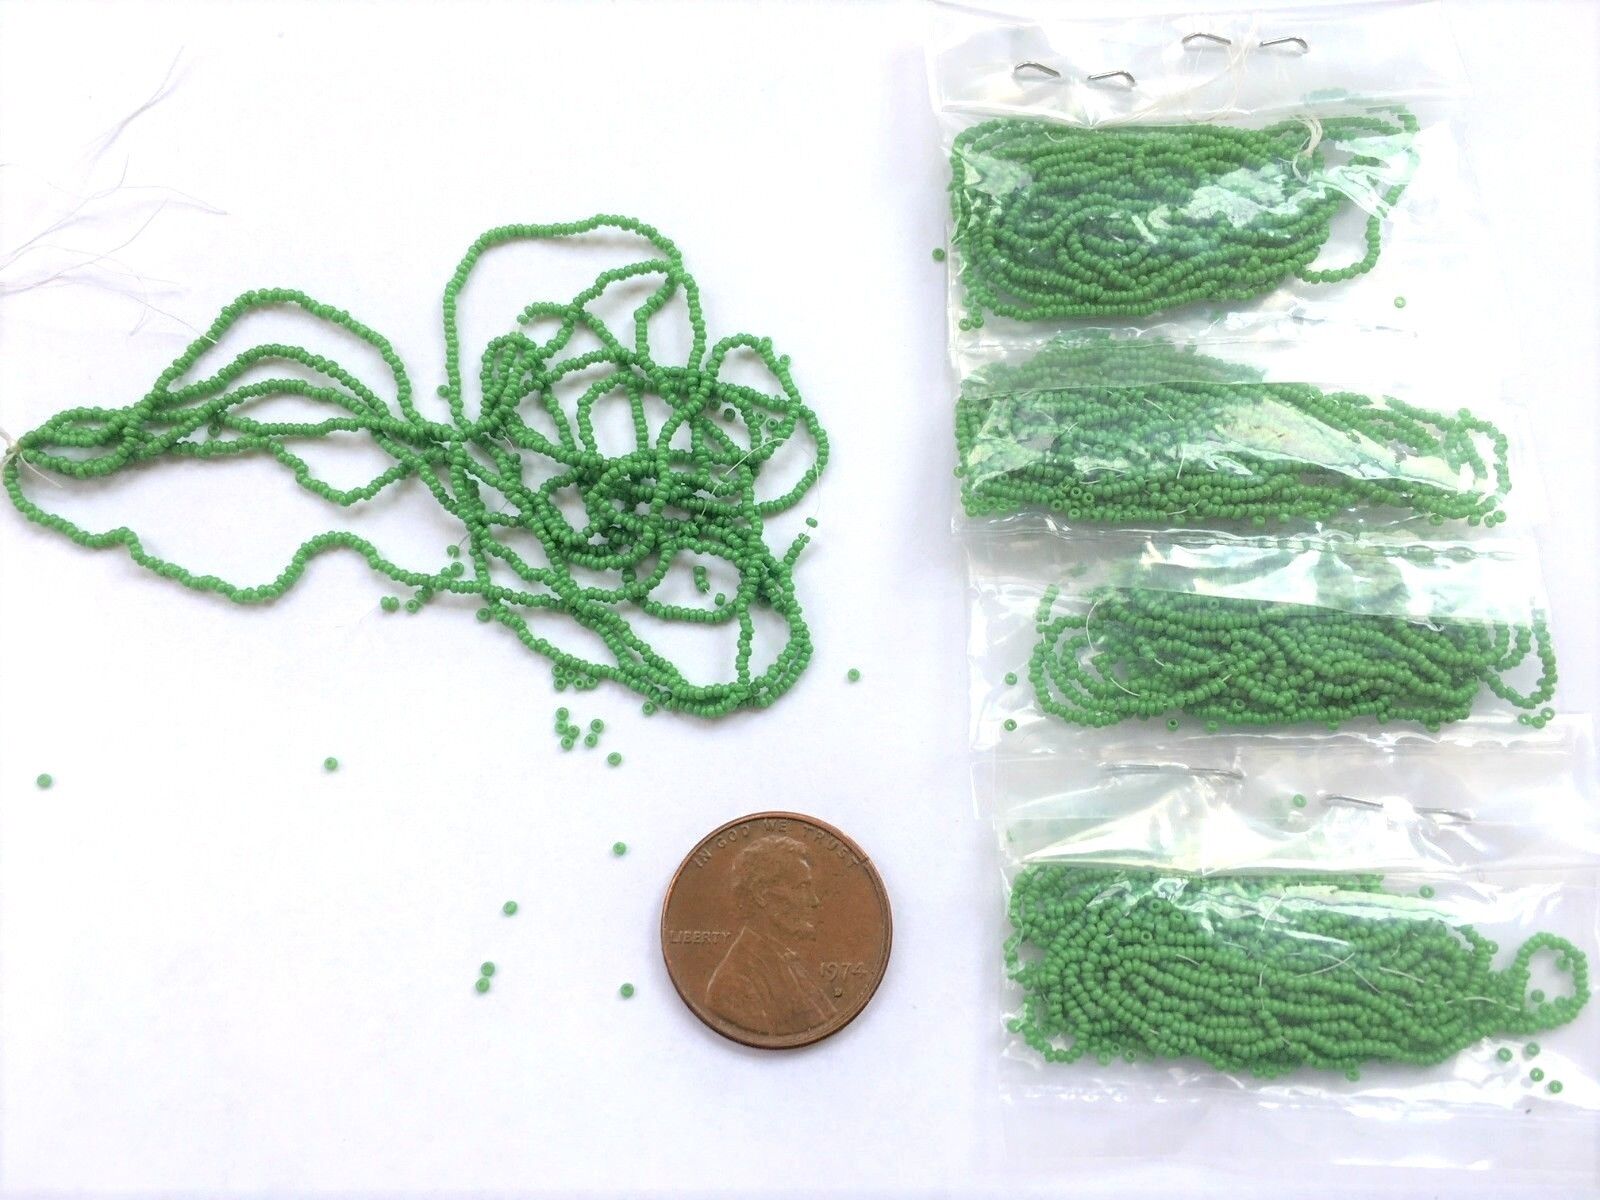 Rare Pre-1900 Antique Micro Seed Beads-20/0 Medium opaque green-2.4g bags 